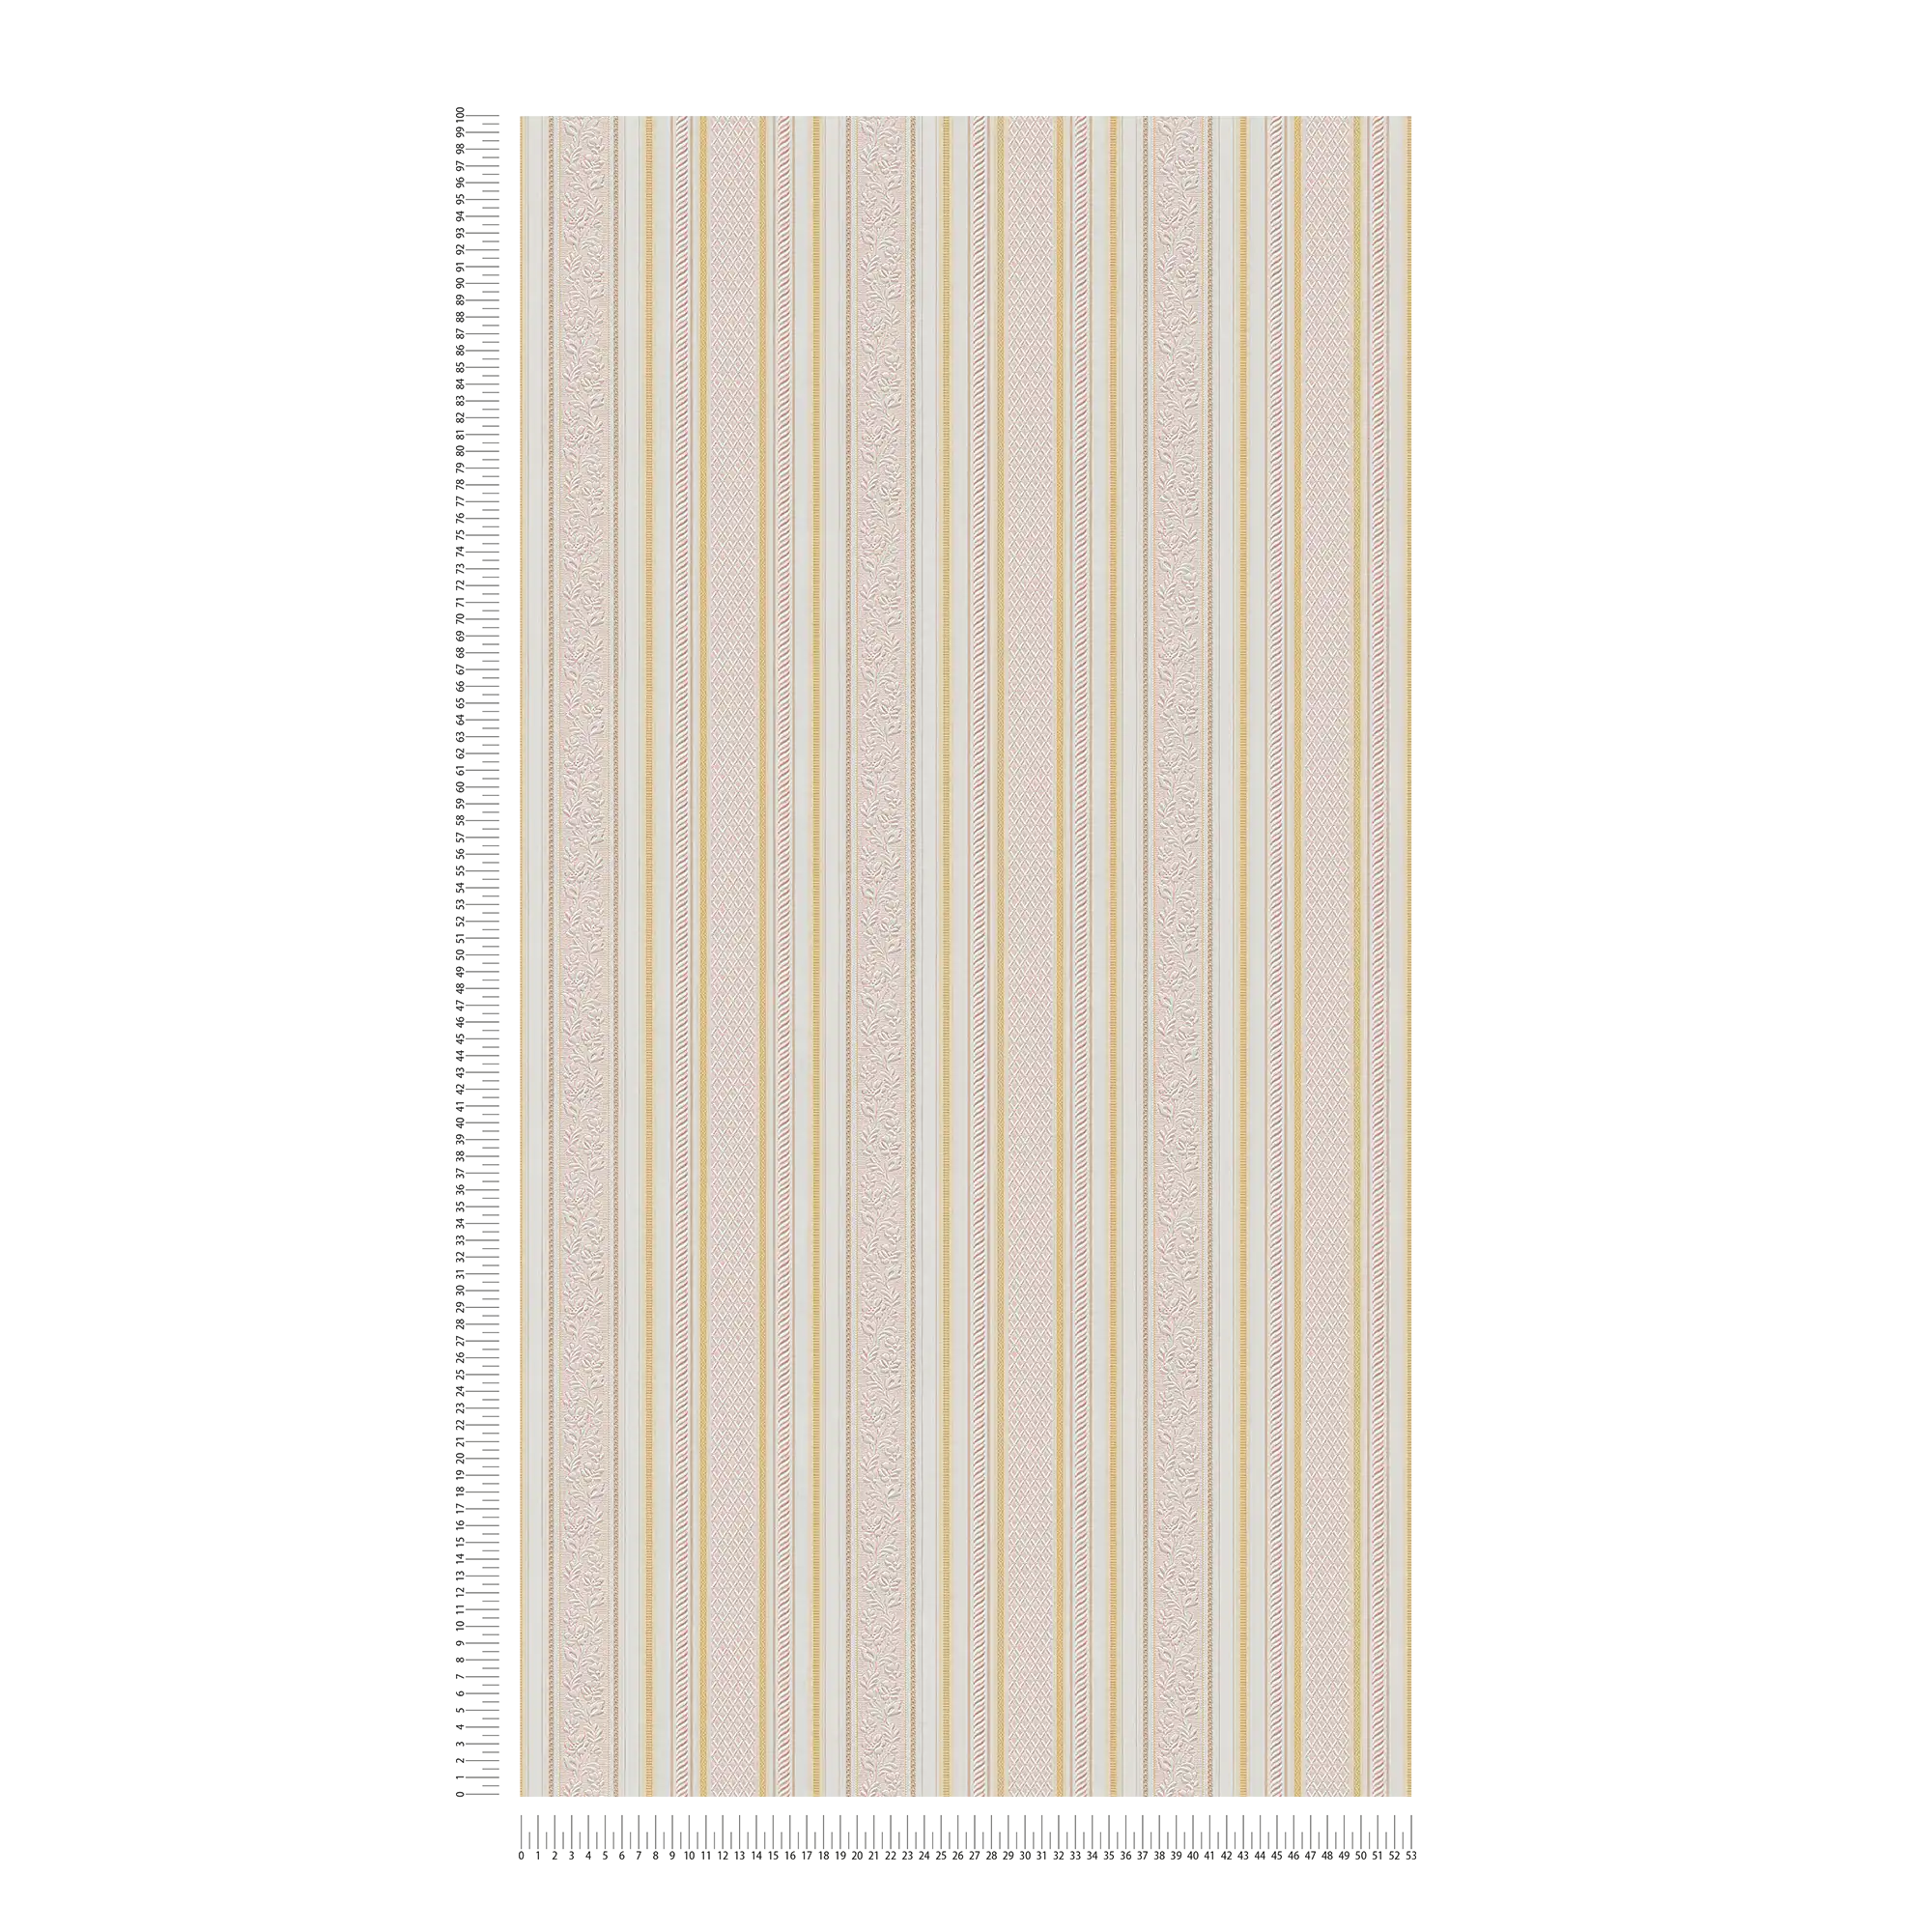             Vintage behangpapier renaissance streeppatroon - metallic
        